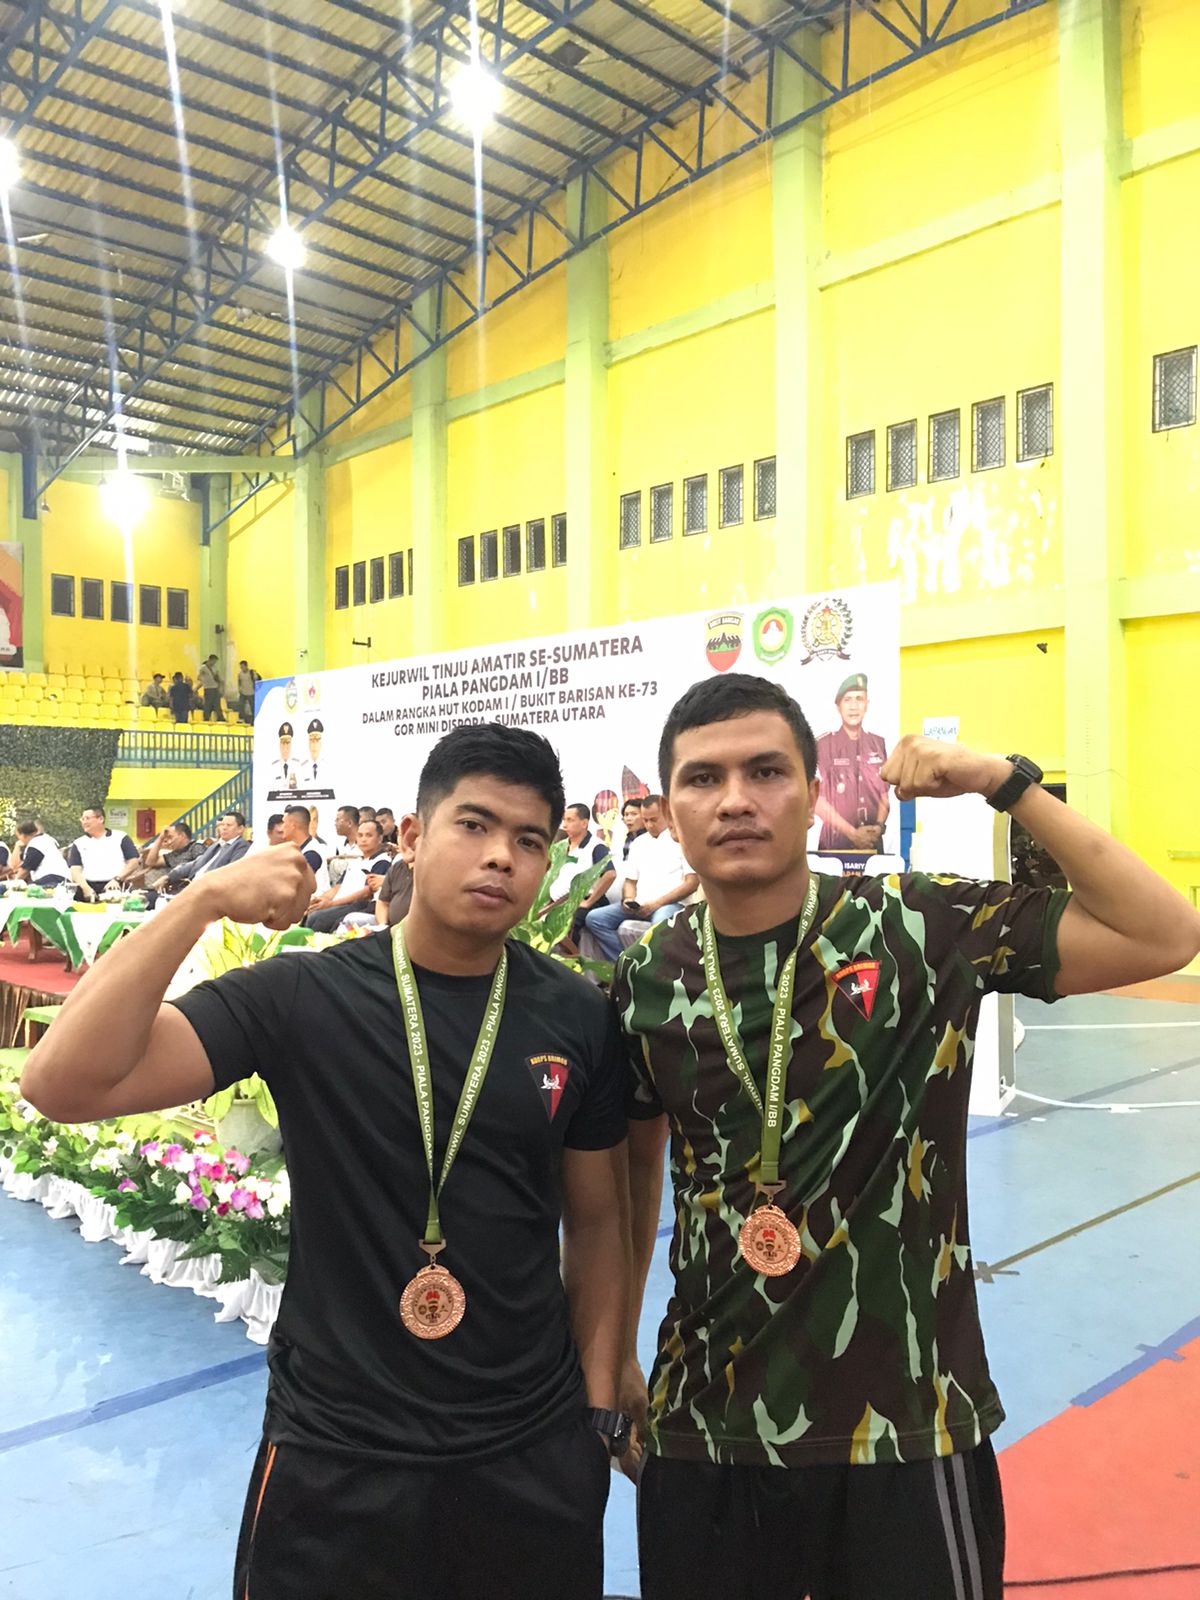 Bikin Bangga! 2 Anggota Brimob Polda Jambi Rebut Medali di Kejurwil Tinju se-Sumatera